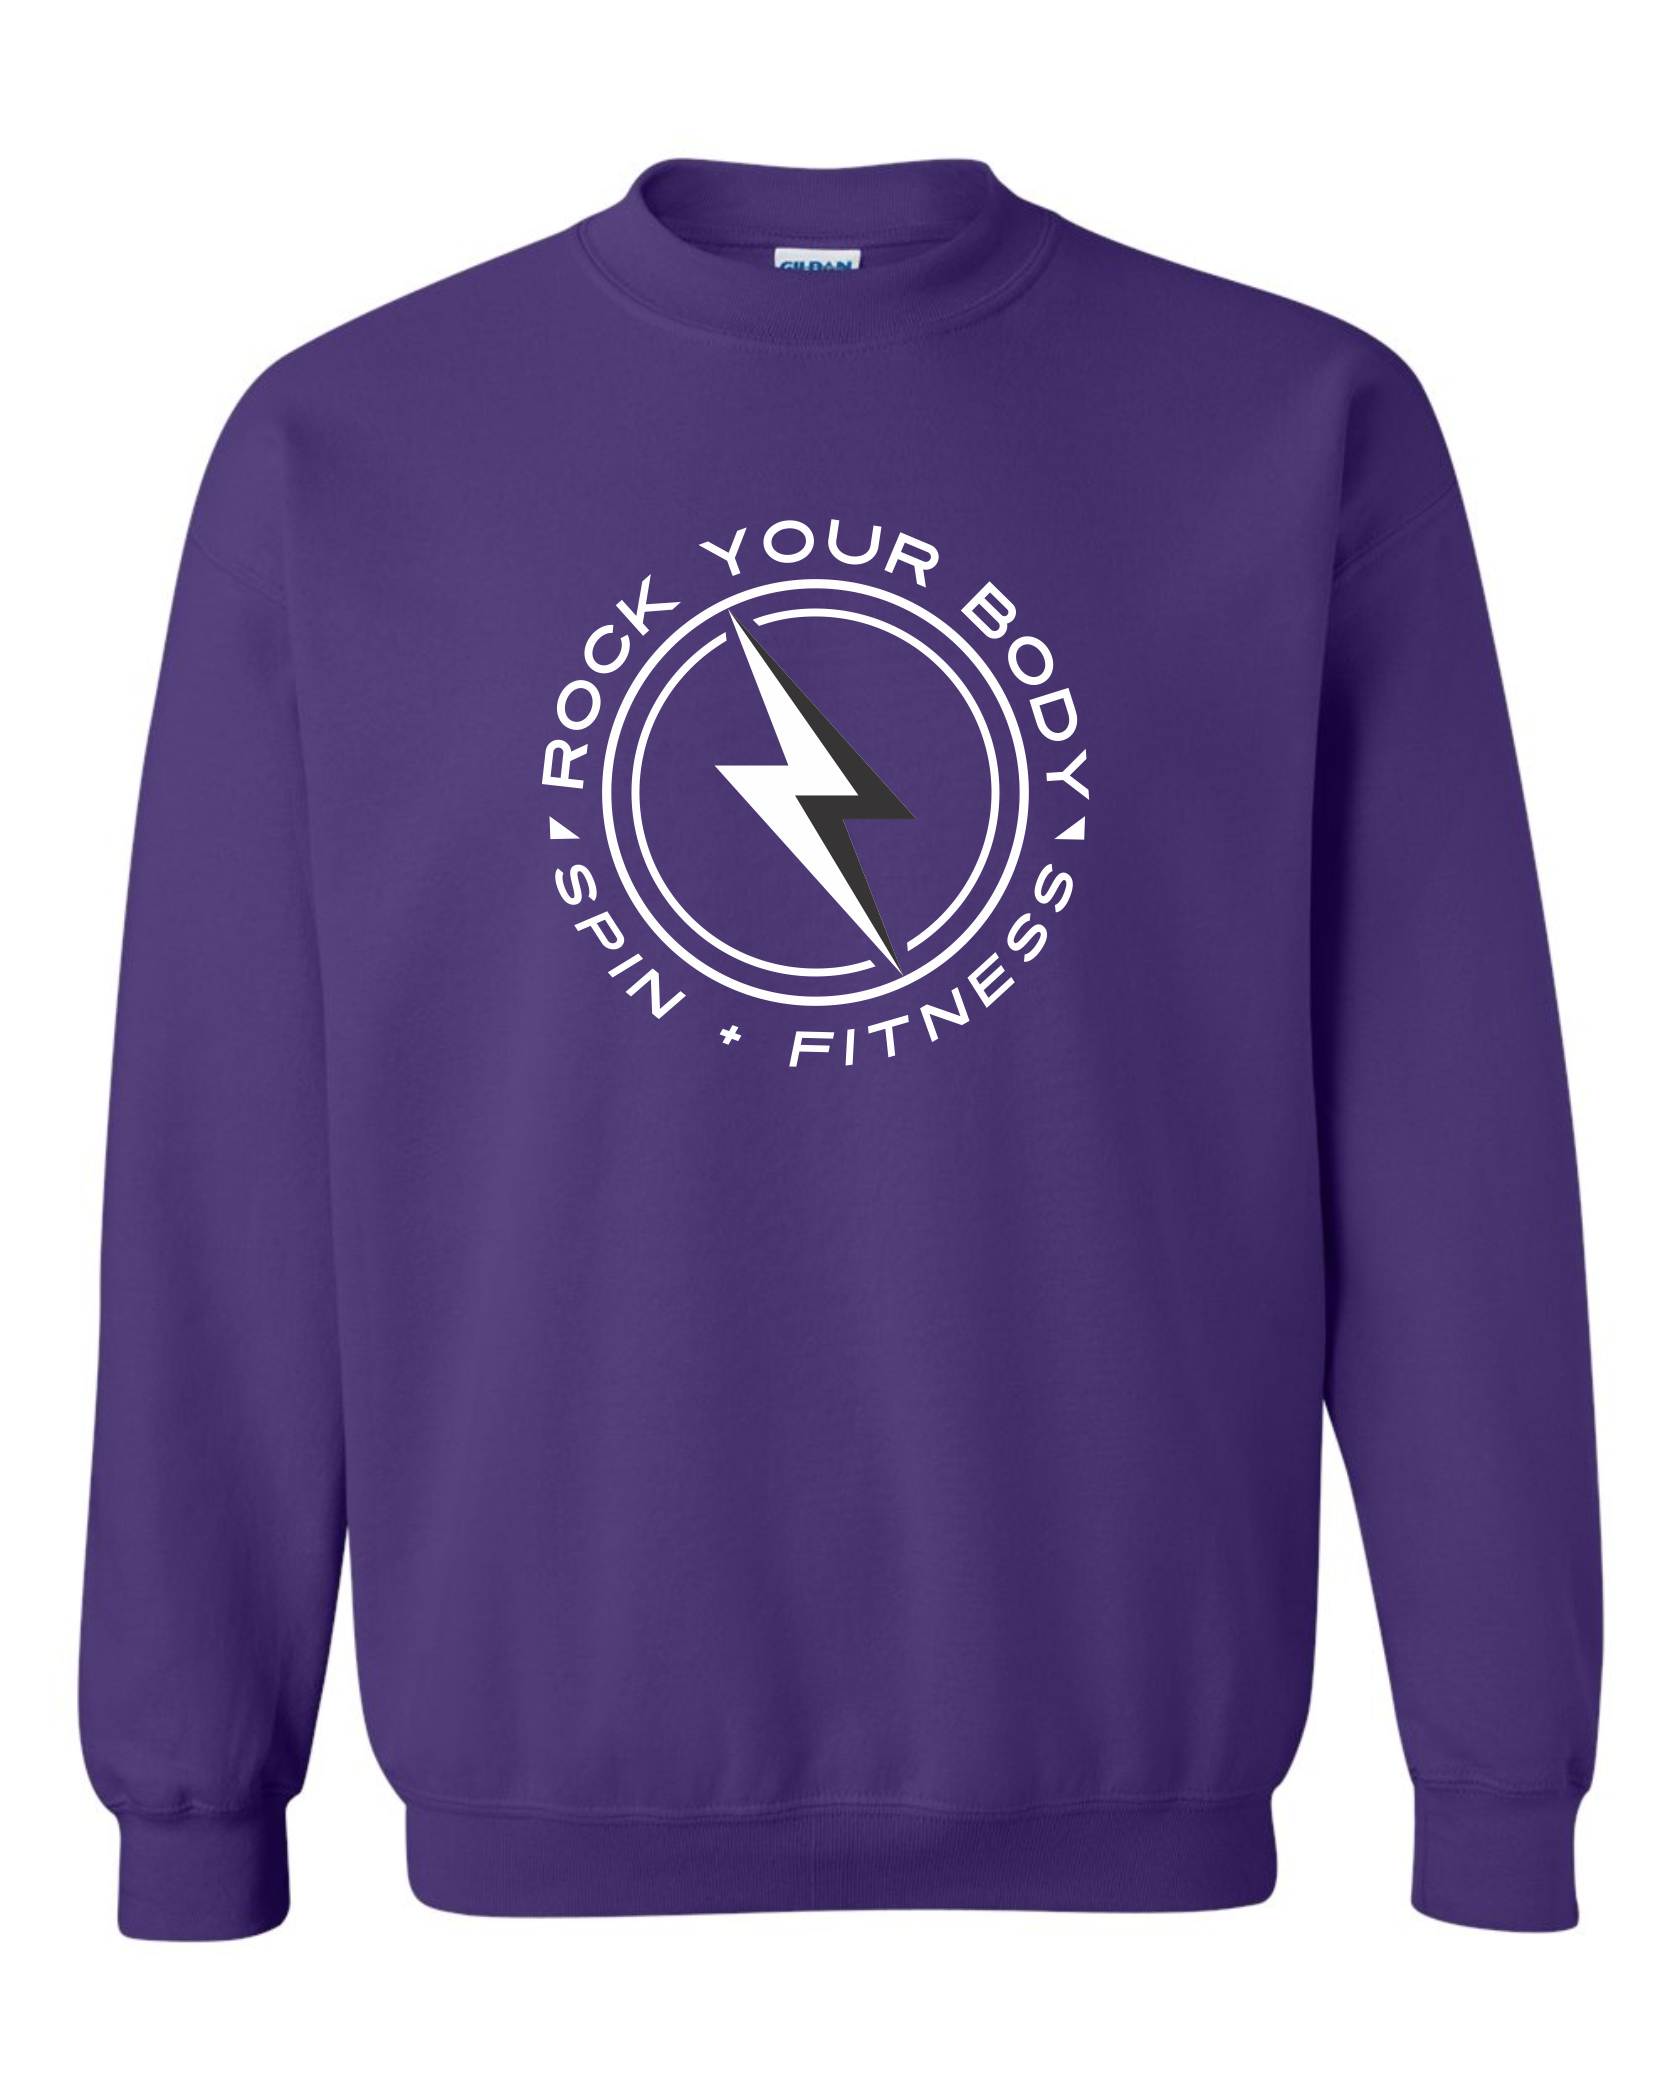 Rock Your Body - Purple Crewneck Sweatshirt